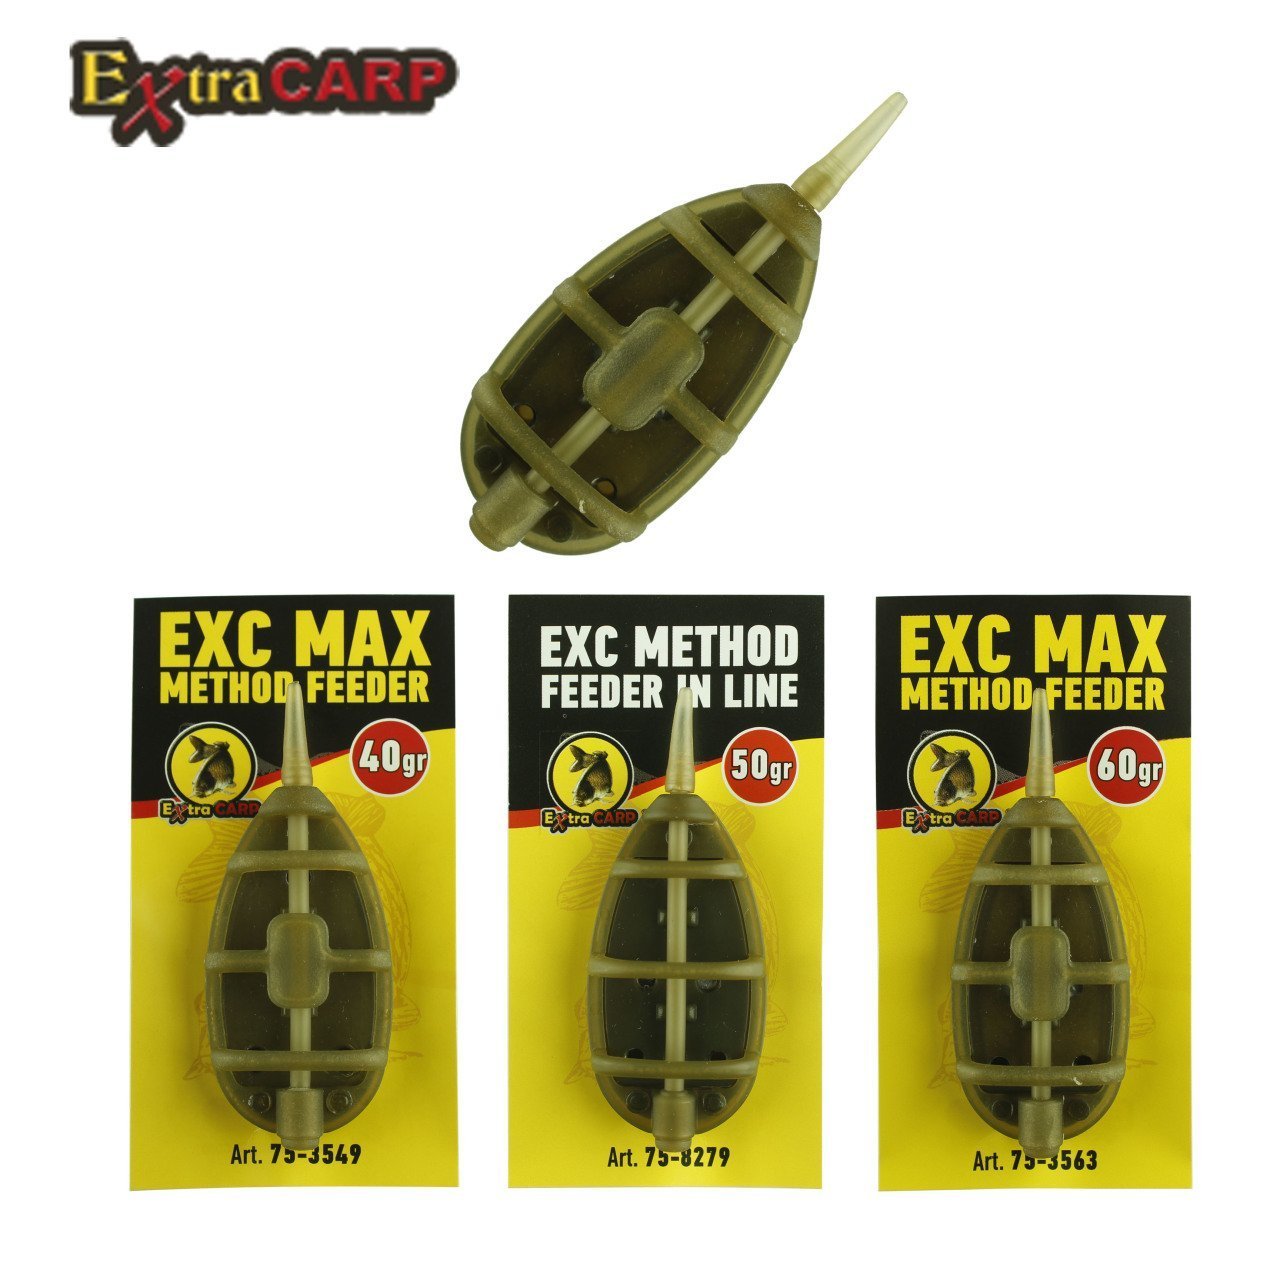 Exc Max Method Feeder 60 gr